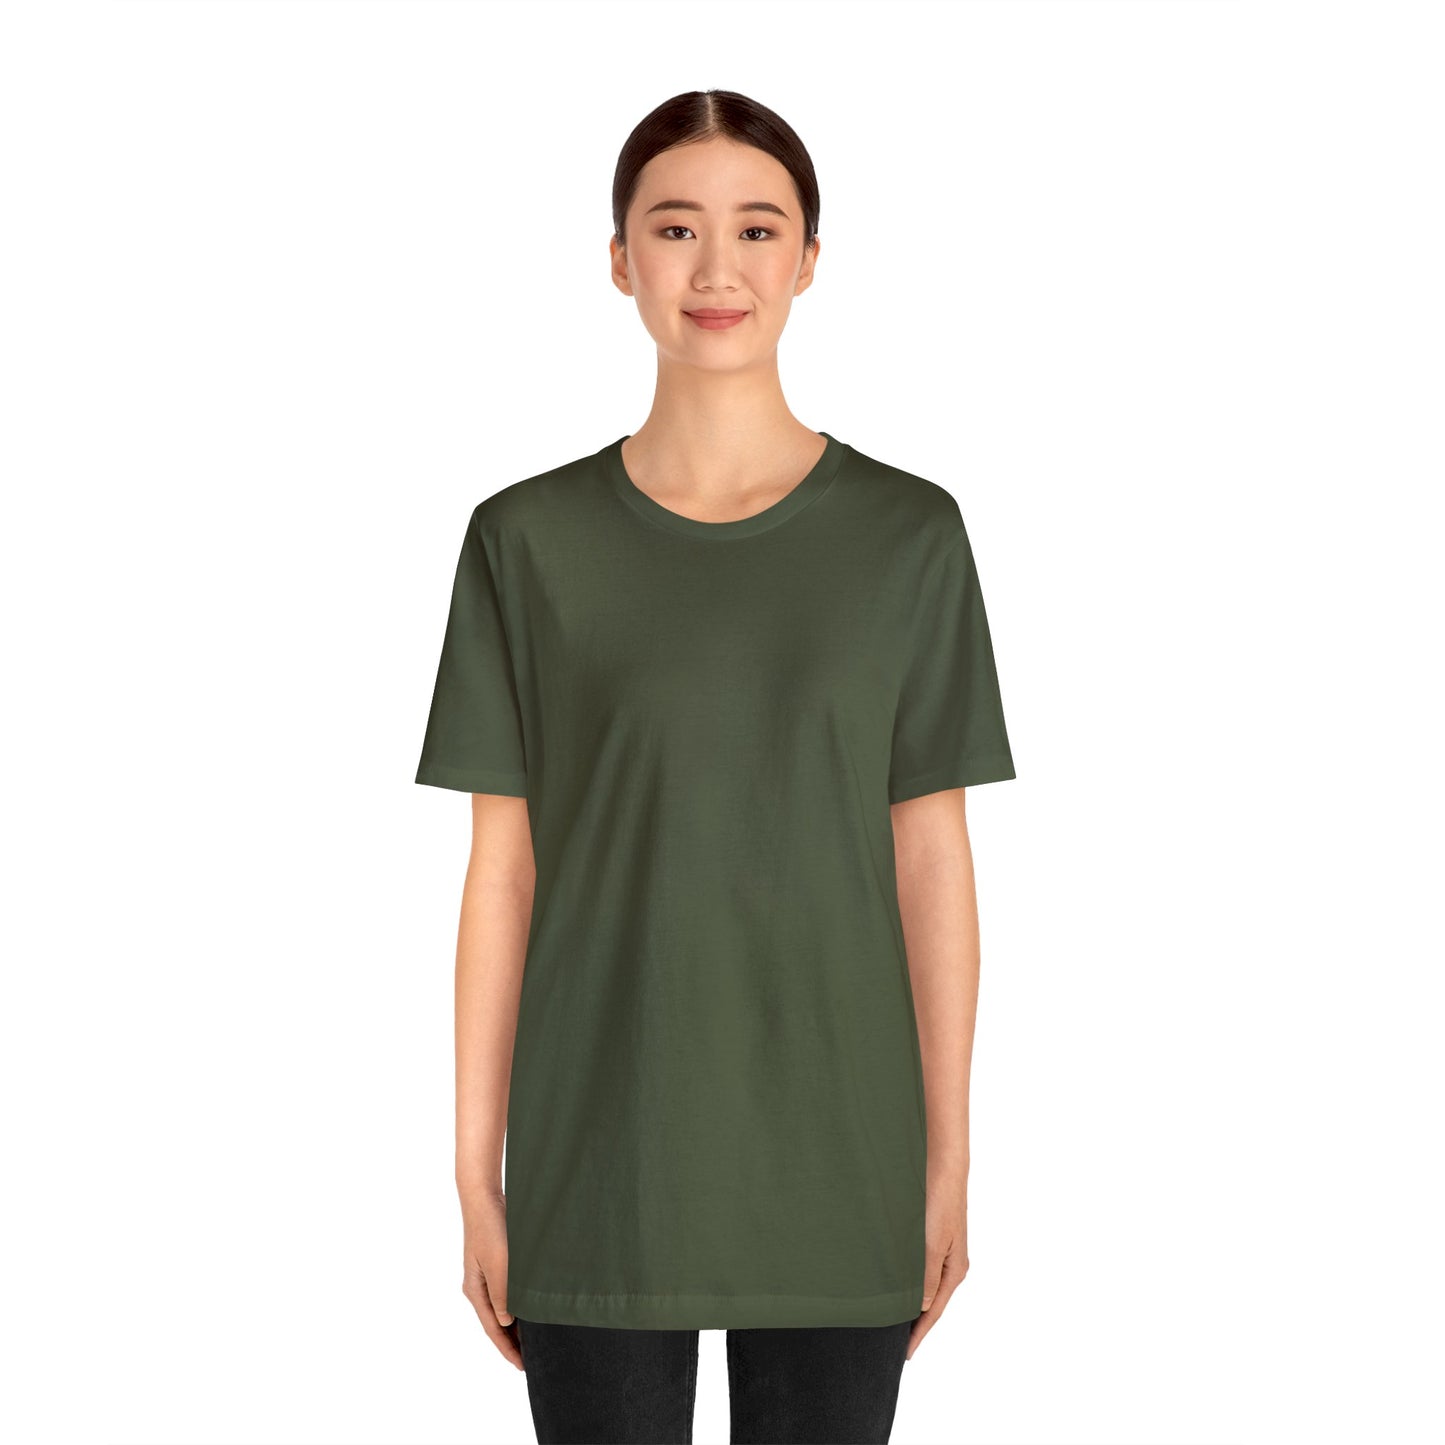 Unisex Jersey Short Sleeve Military Green T Shirt